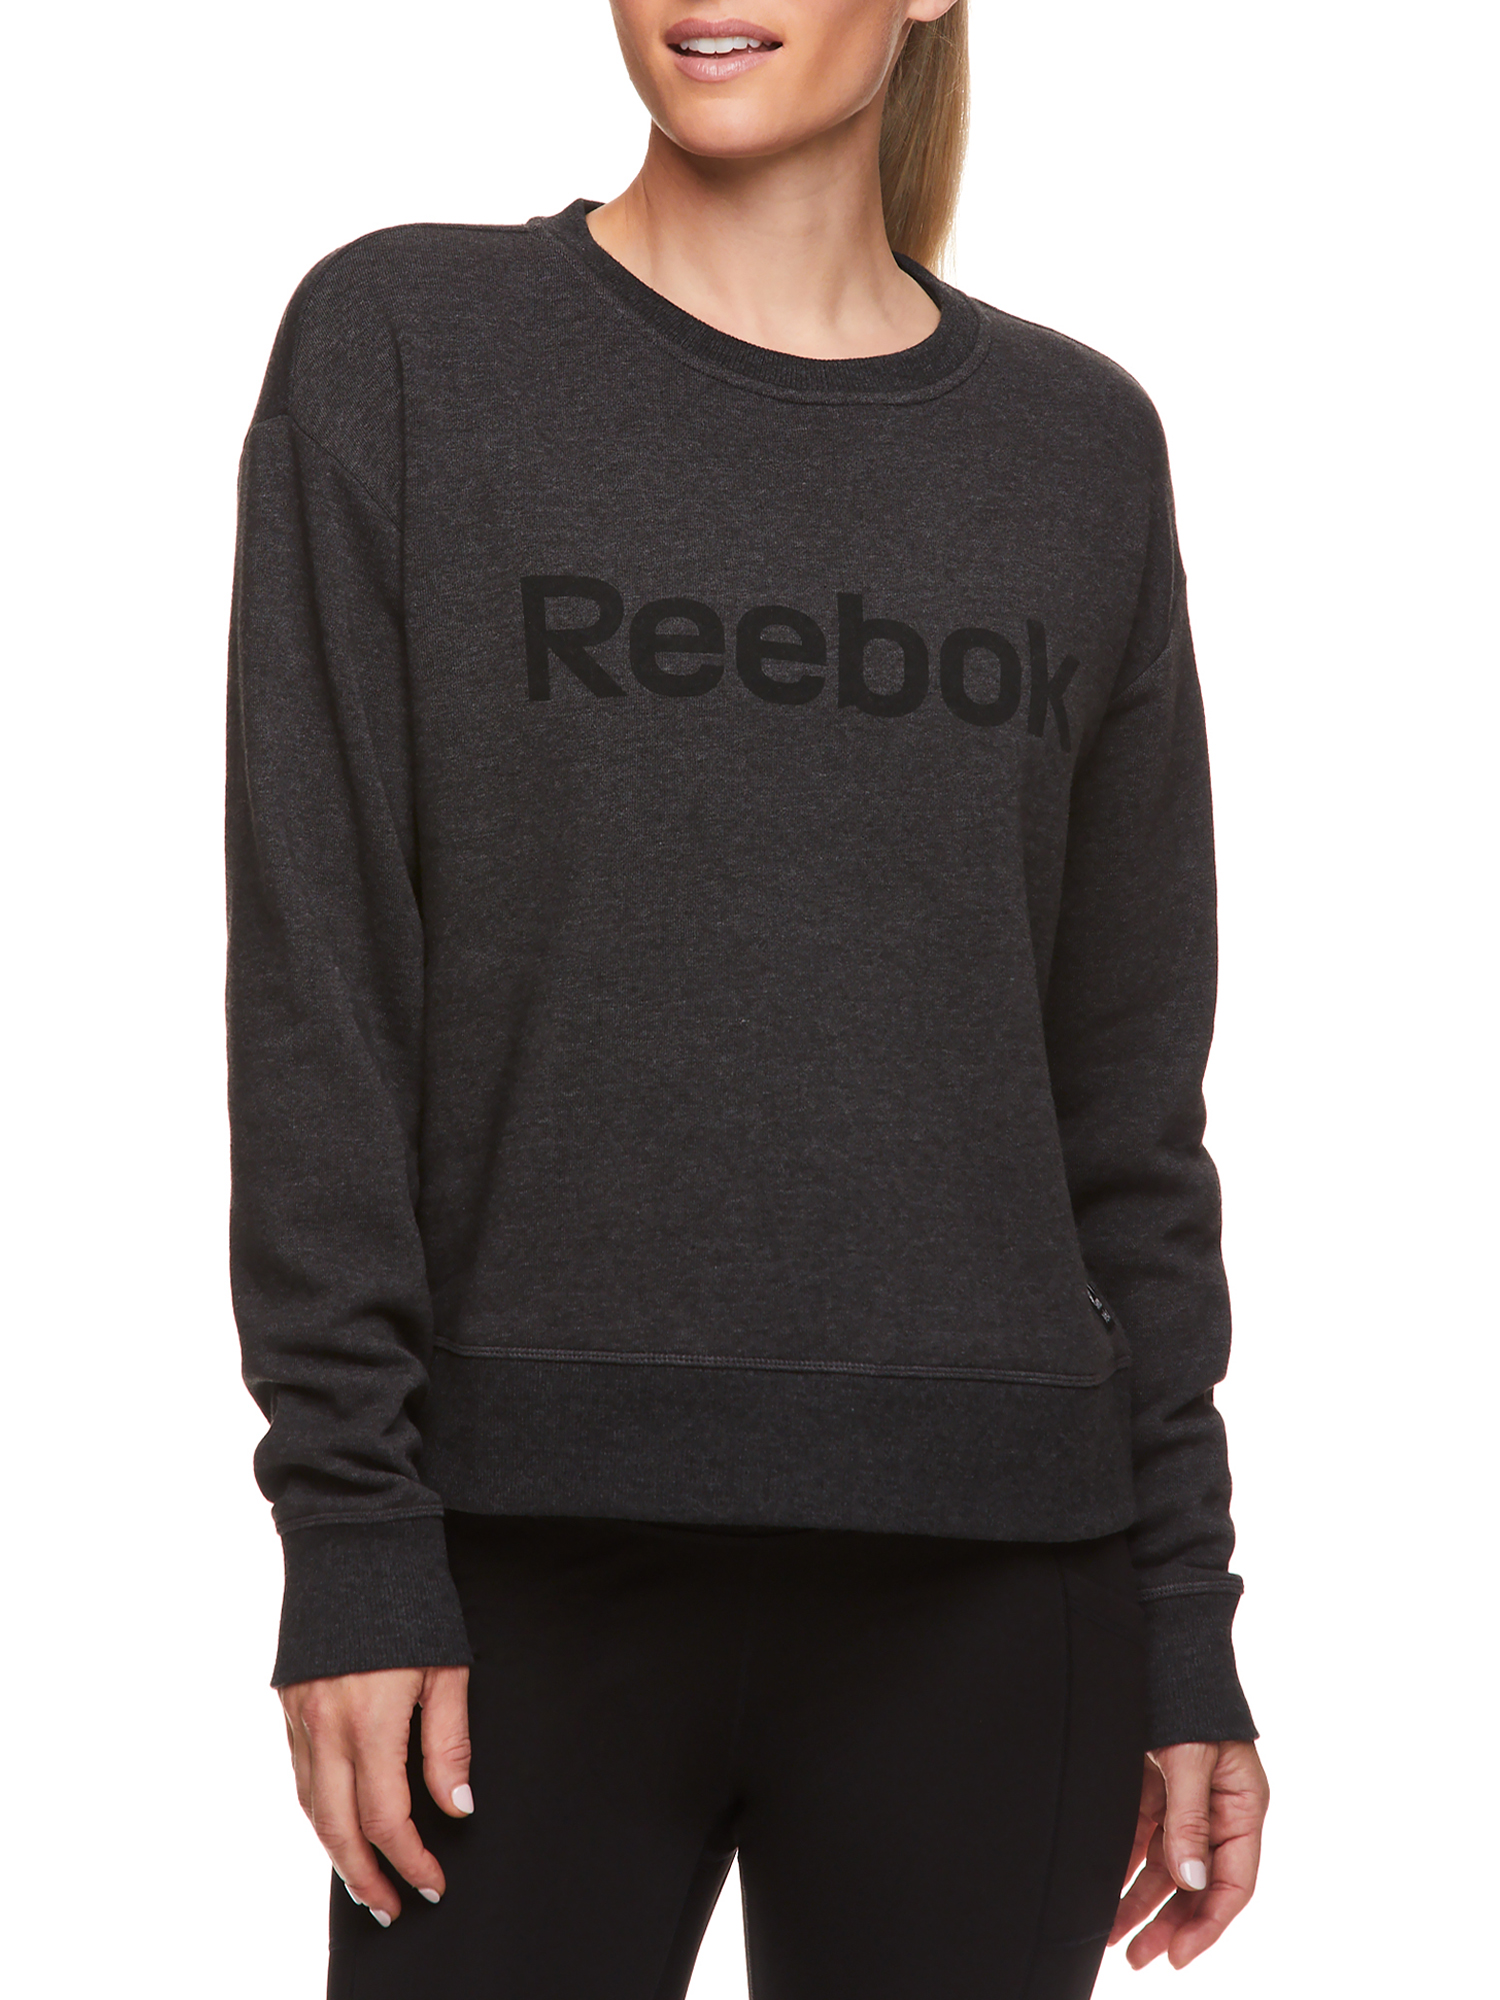 Reebok Womens Cozy Crewneck Sweatshirt with Graphic - image 1 of 4